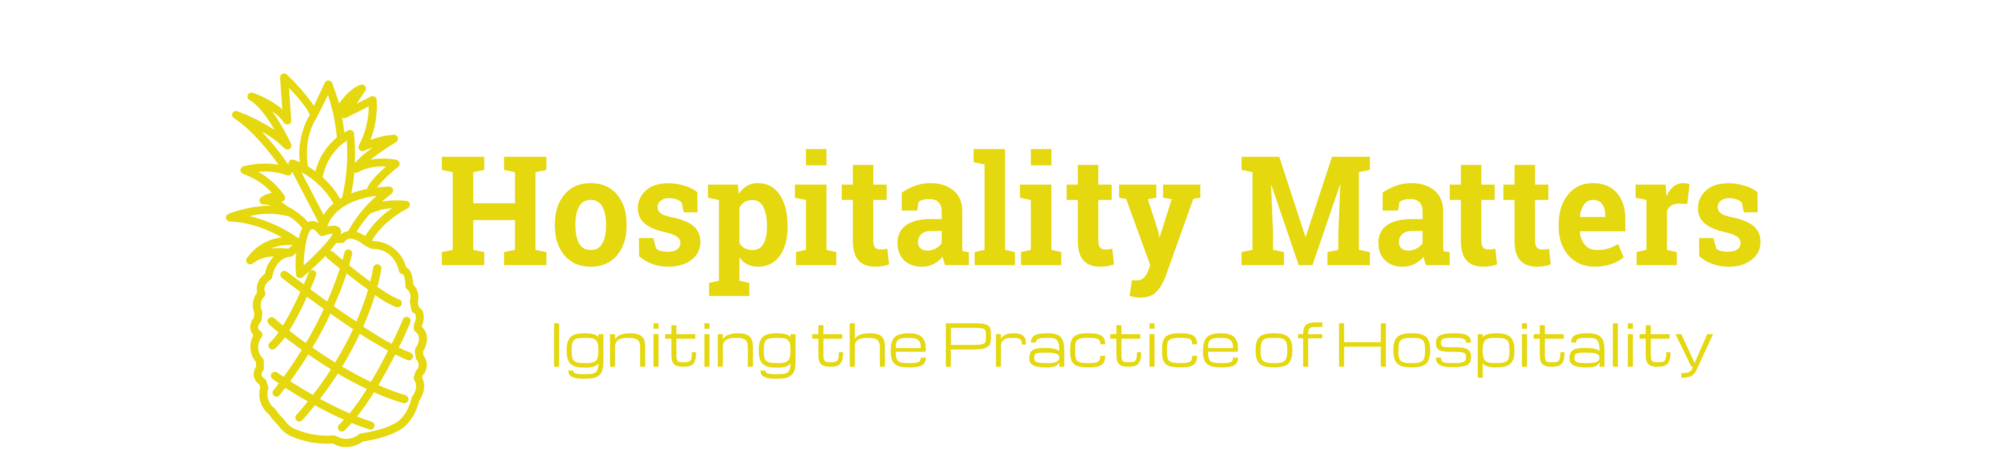 Hospitality Matters